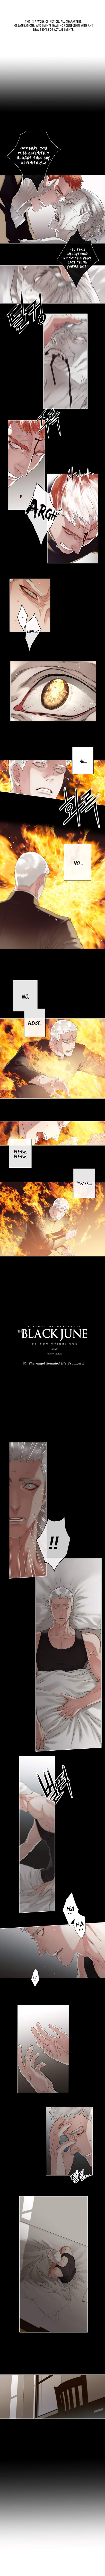 The Black June 6 1